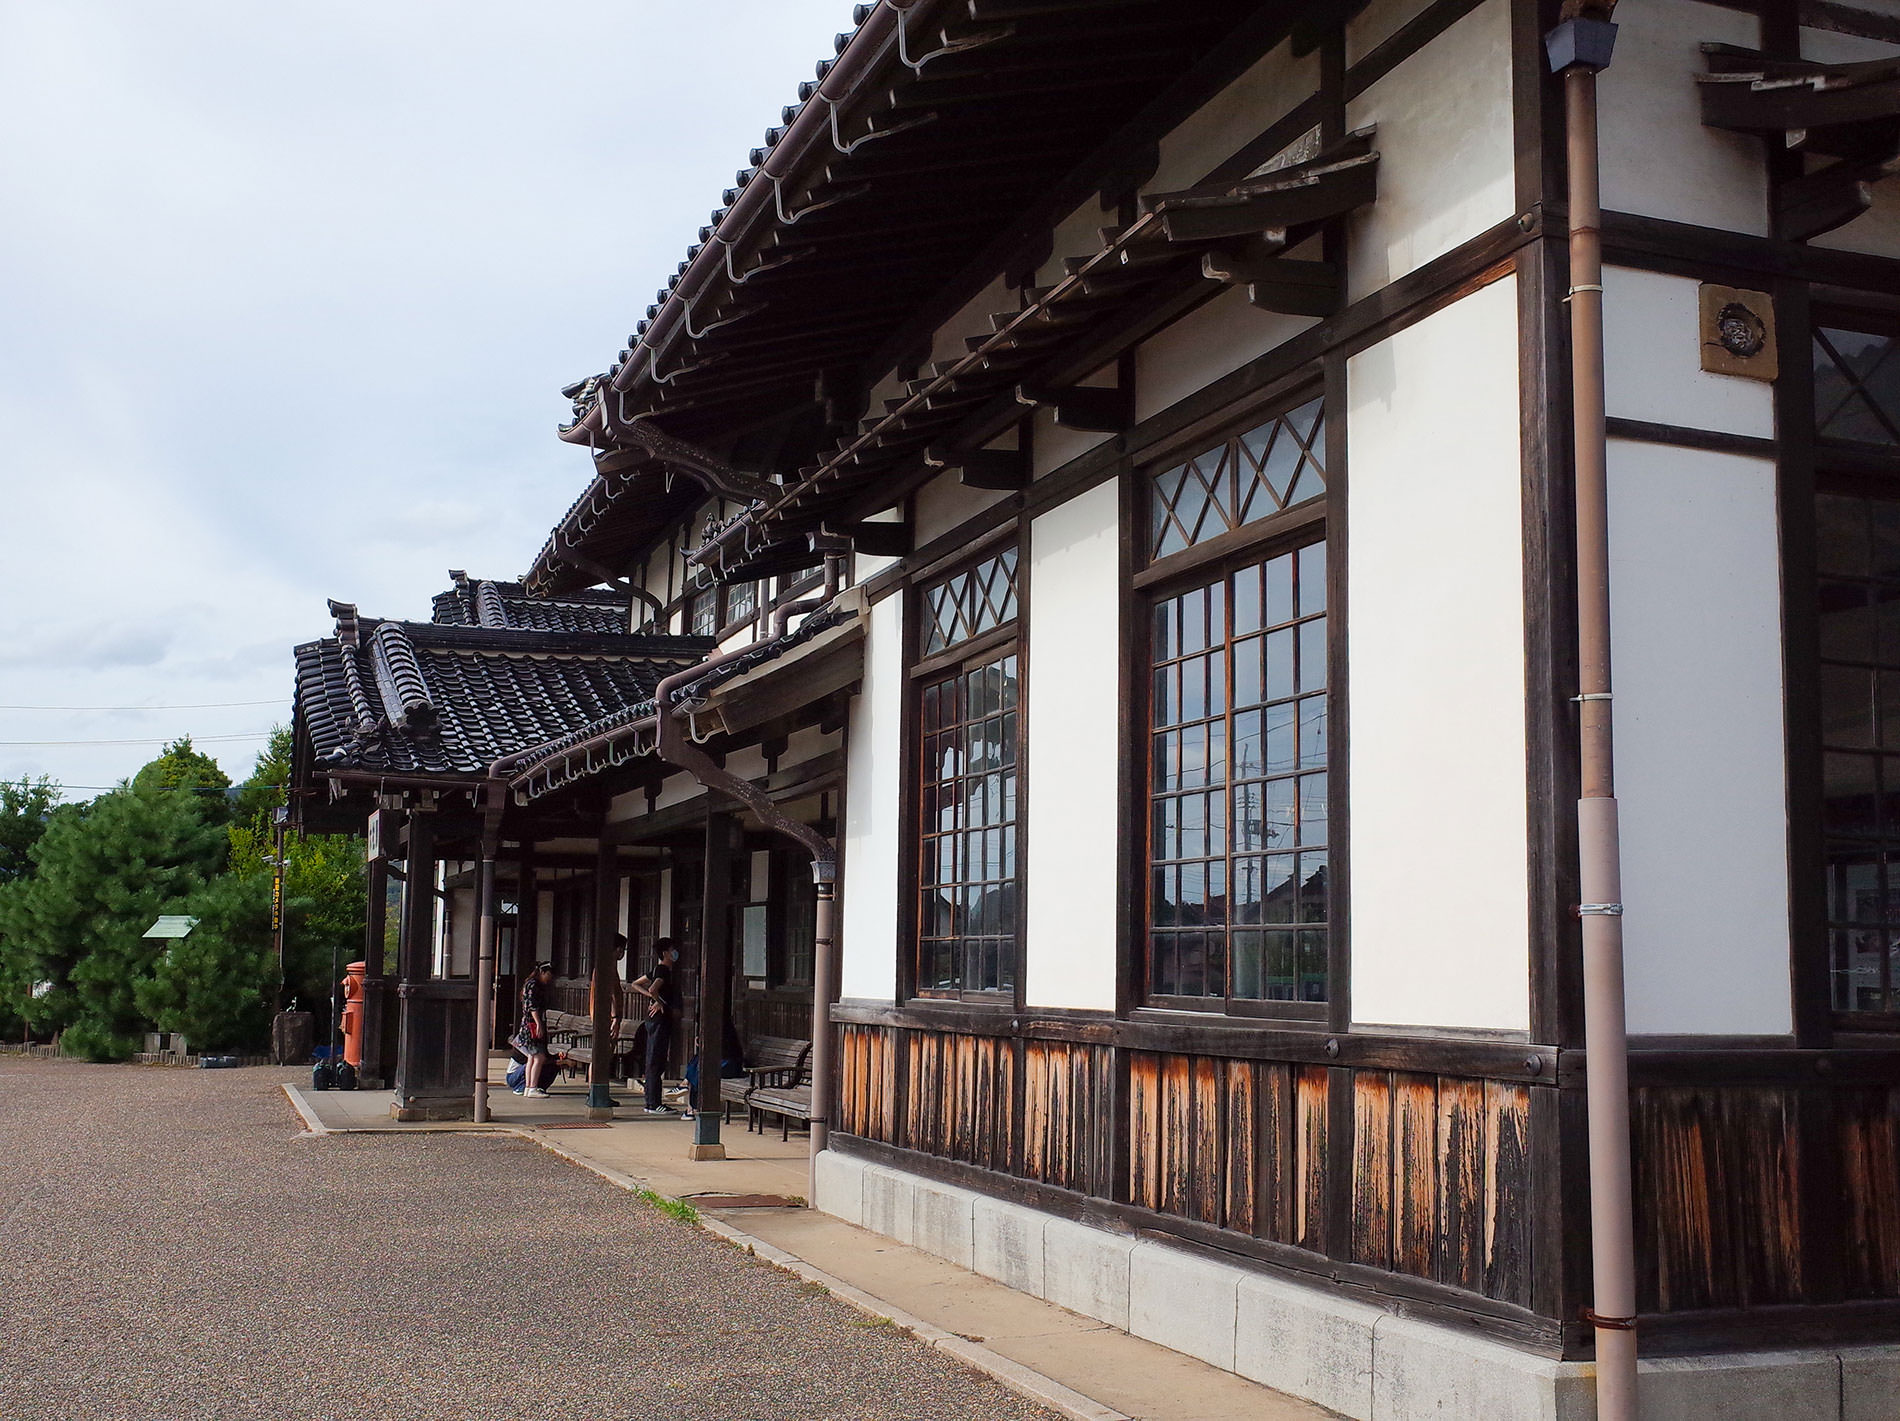 旧大社駅_出雲旅行2020 / Old Taisya Station in Izumo Japan 2020